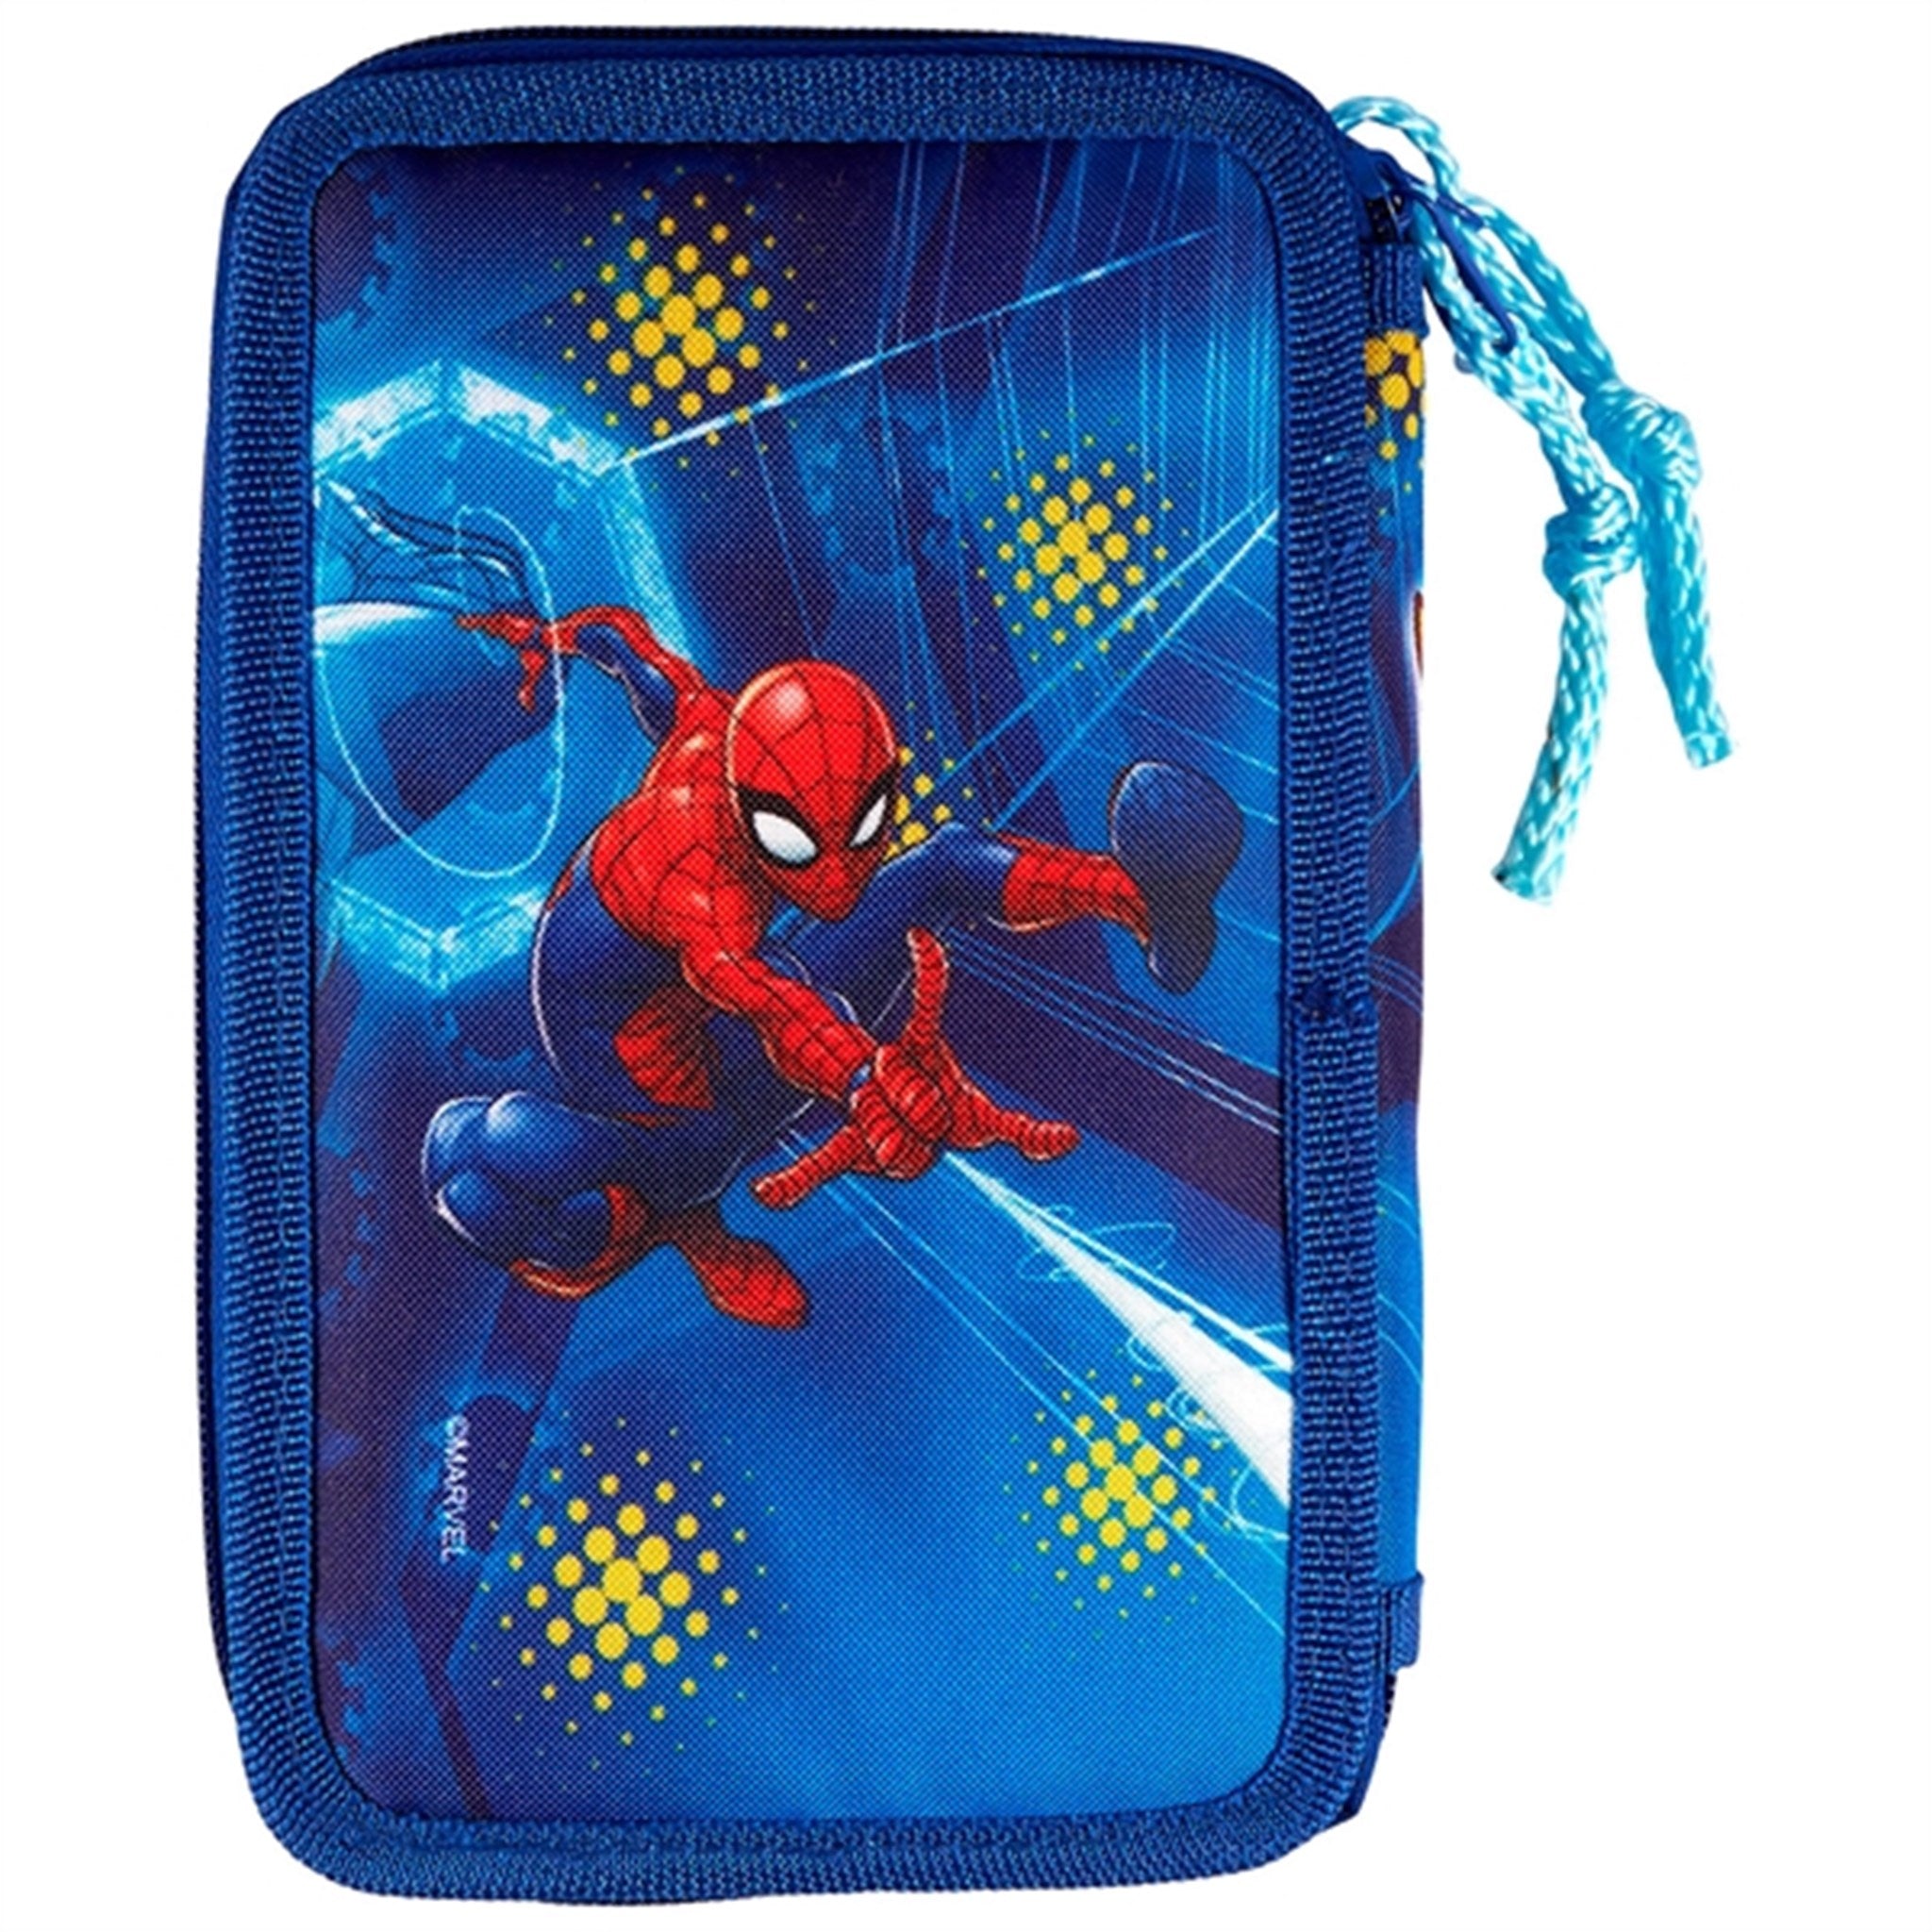 Euromic Spiderman Pencil Case 4